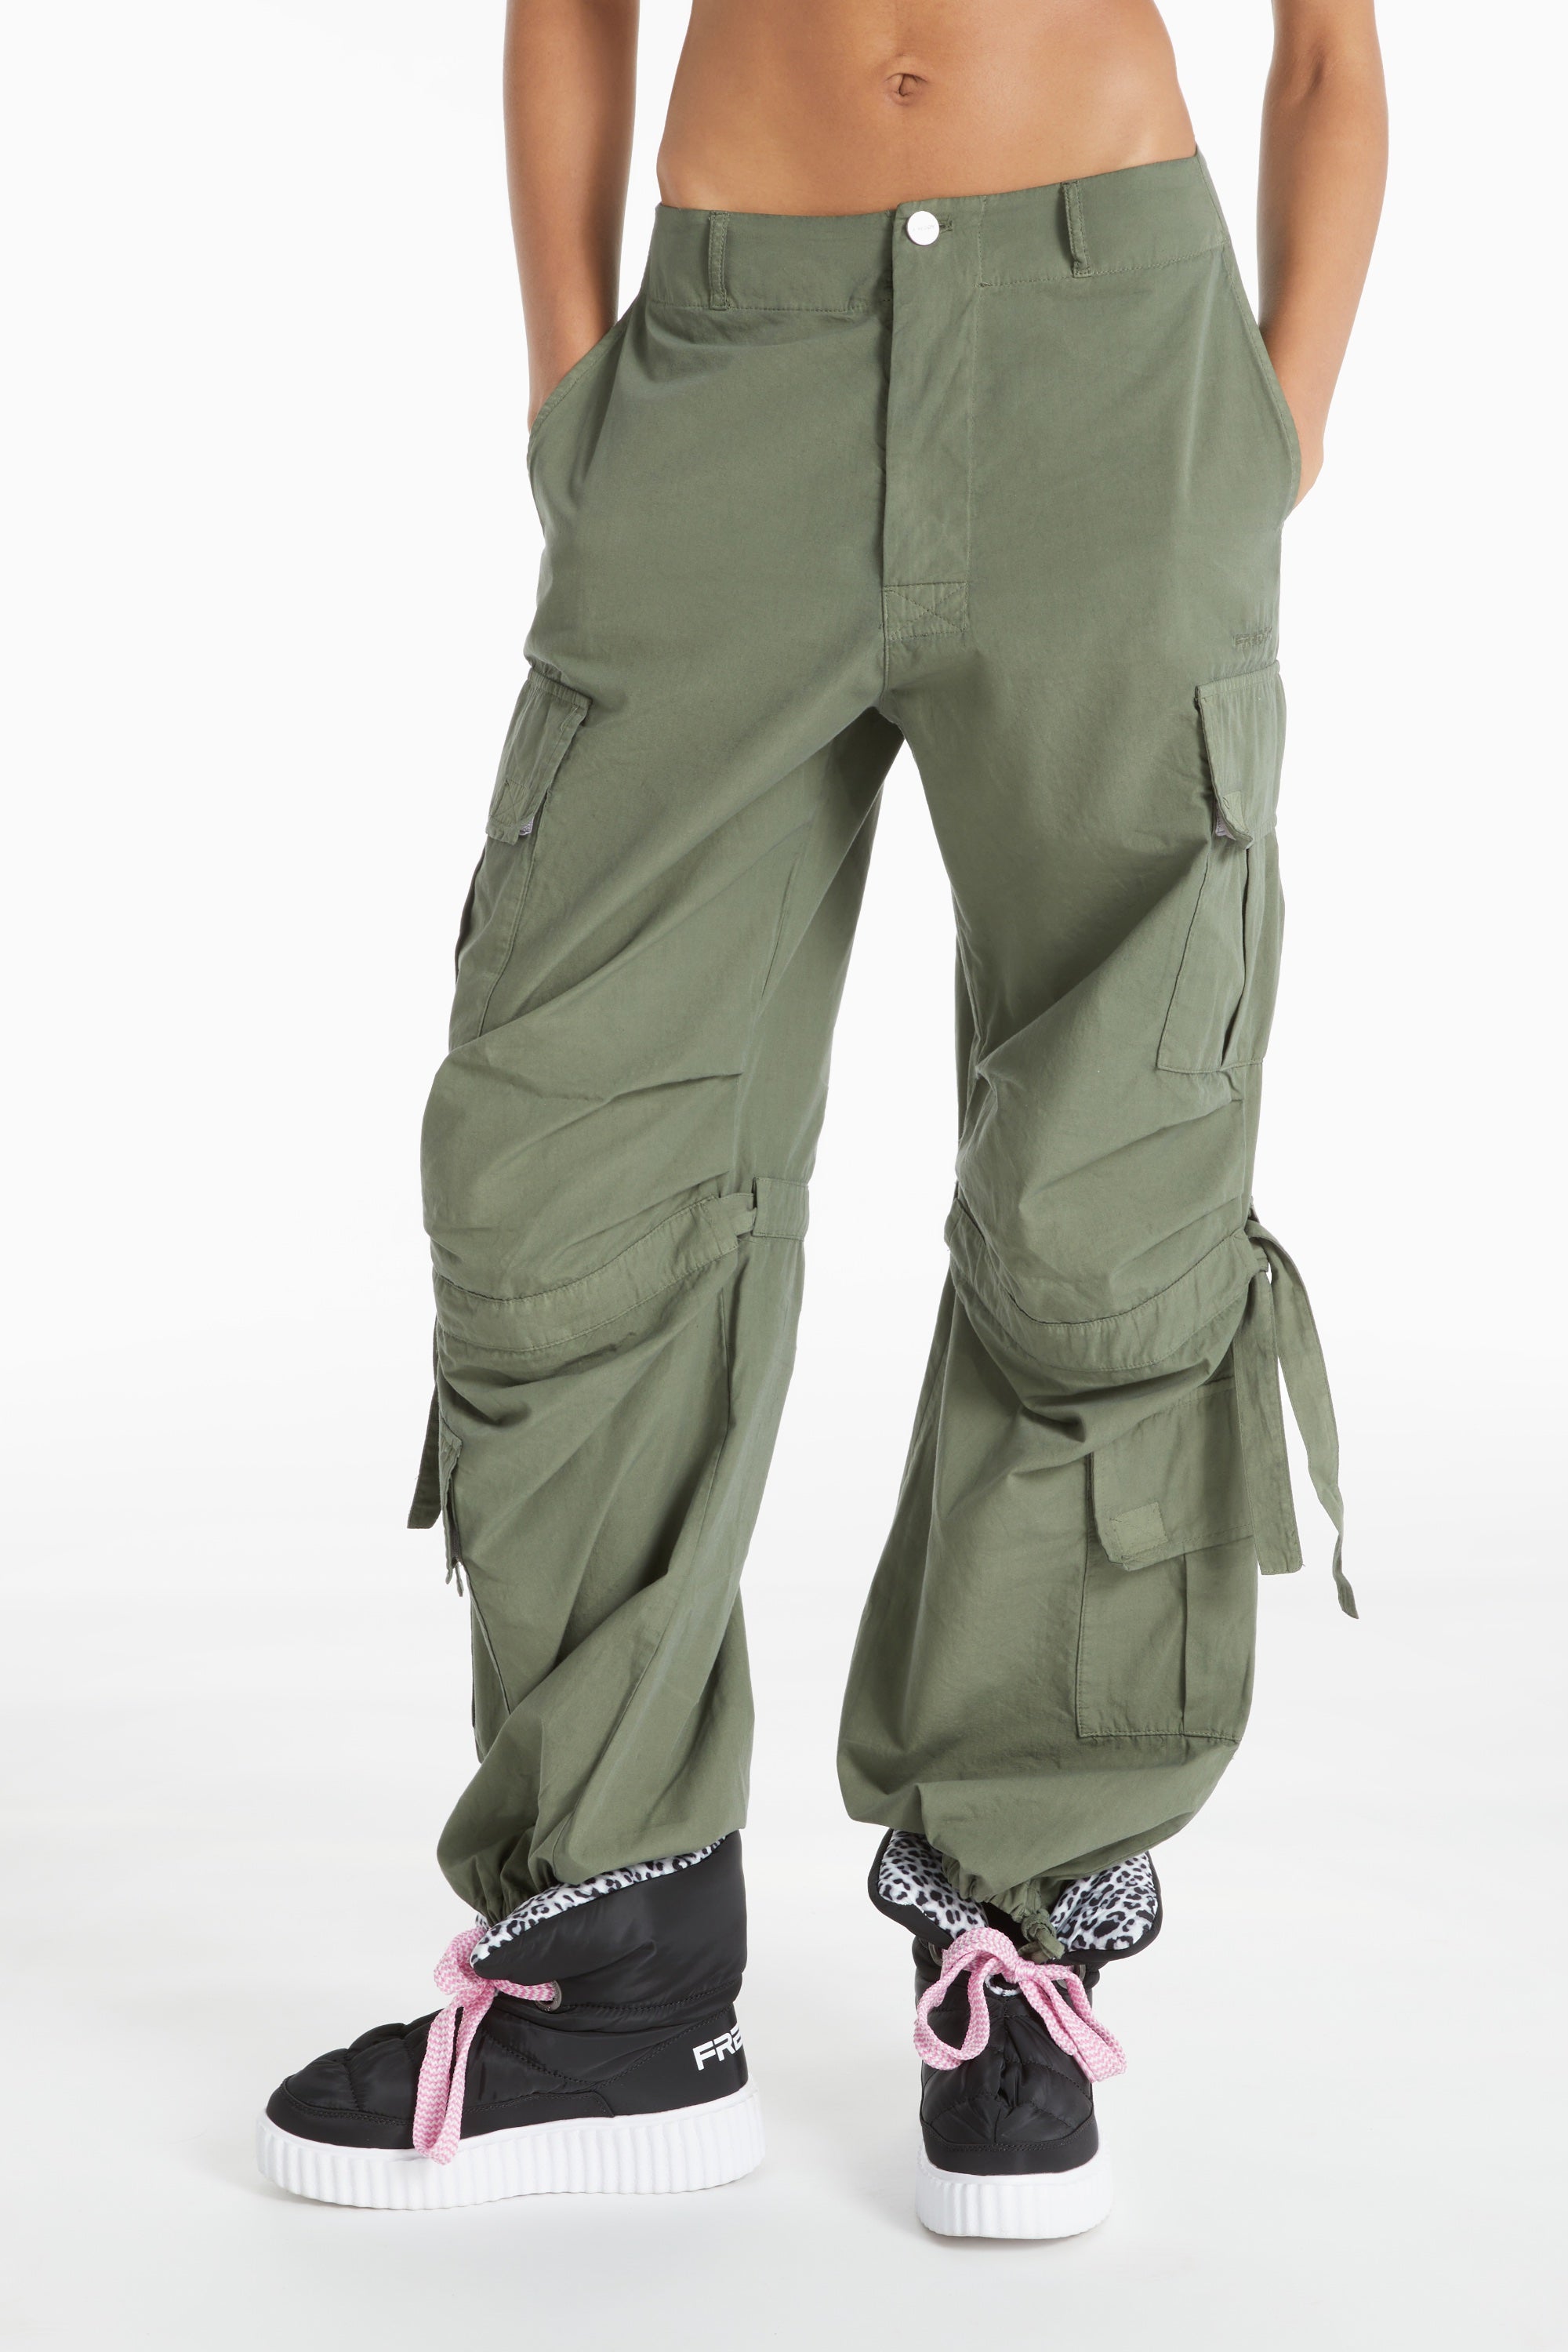 (BRITNEYF301-V69X) Freddy Poplin Cargo Pants with side pockets in Khaki